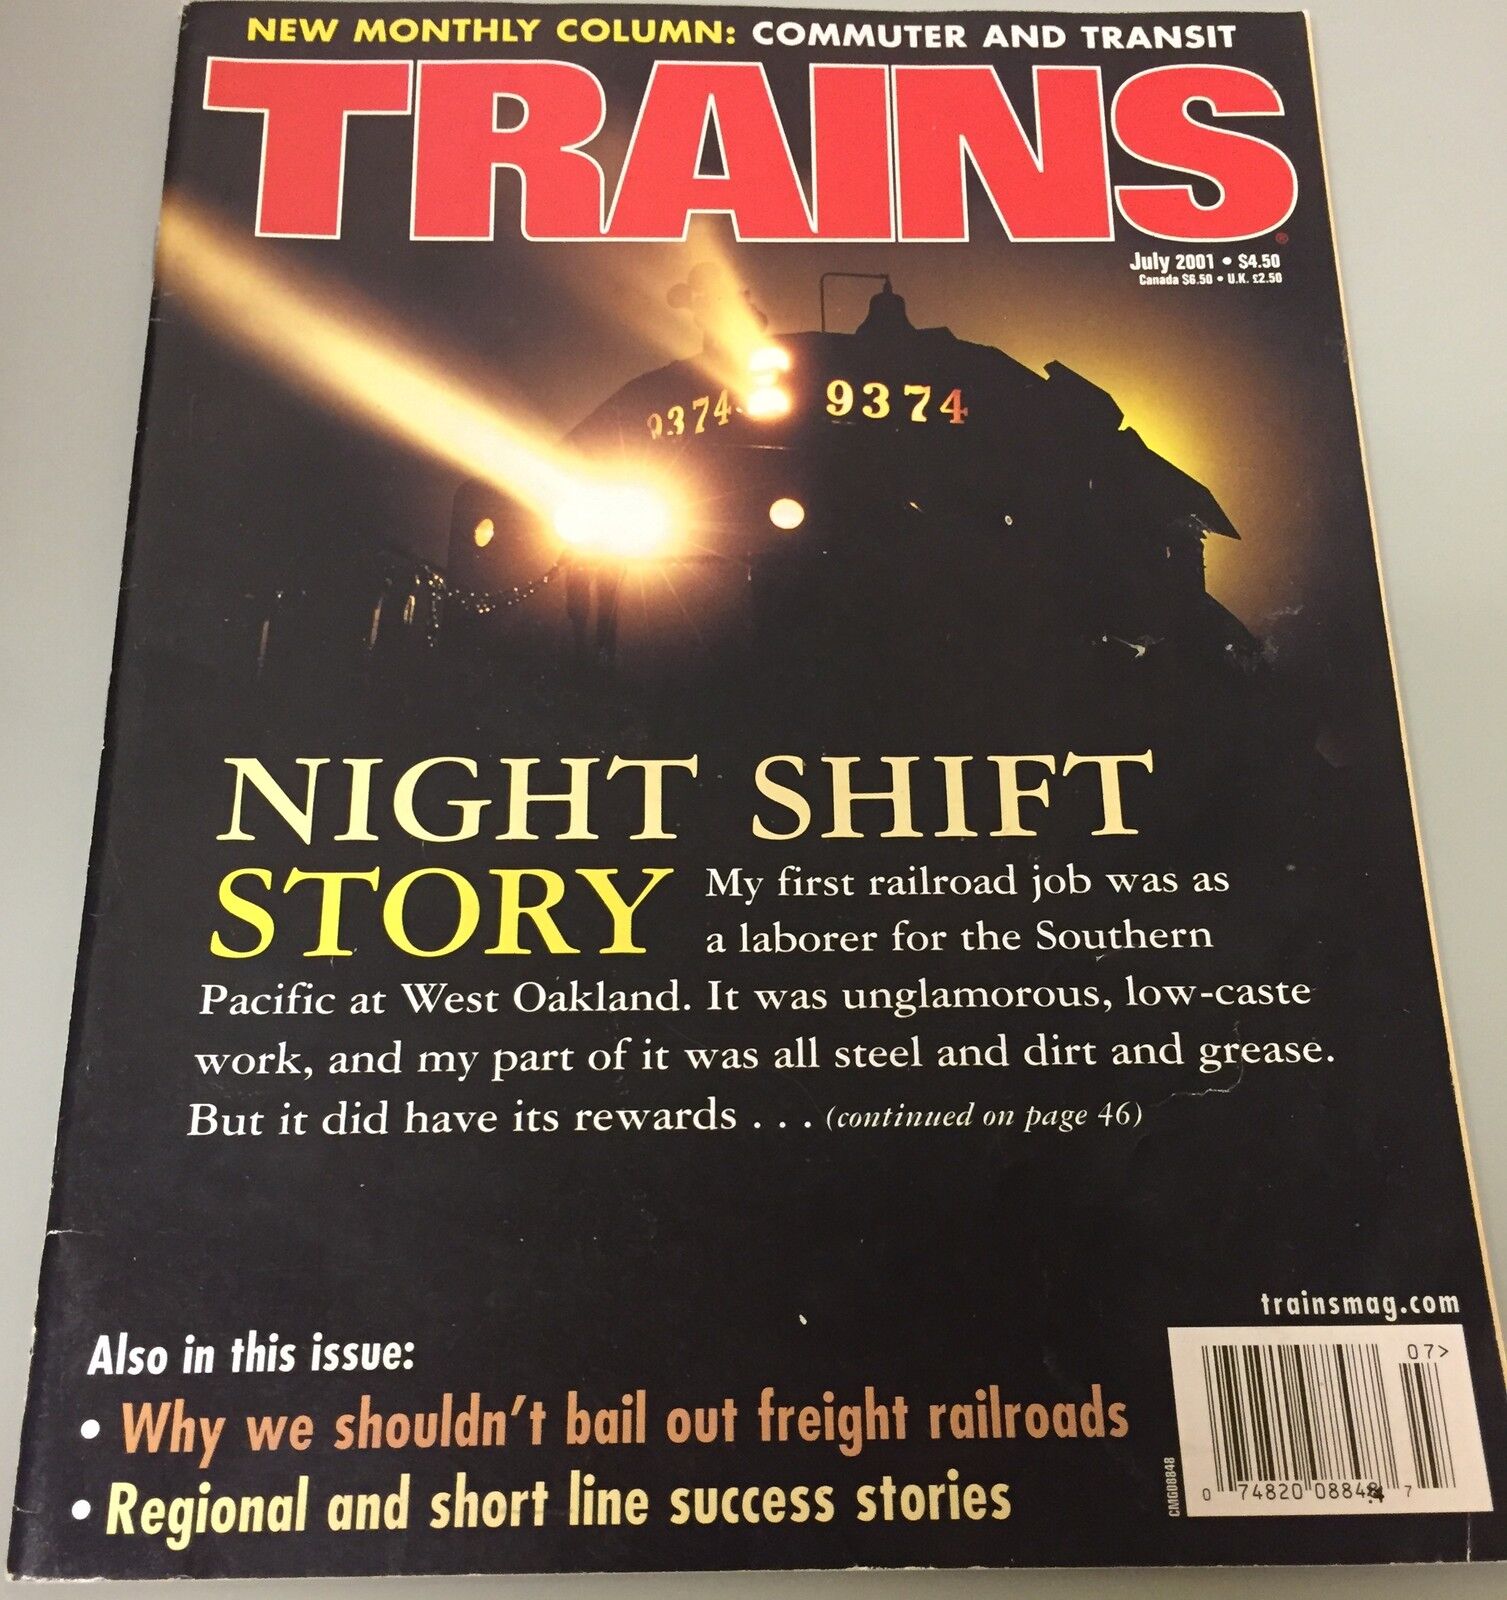 Trains Magazine July 2001 Issue Night Shift Story,regional/short Lines Success